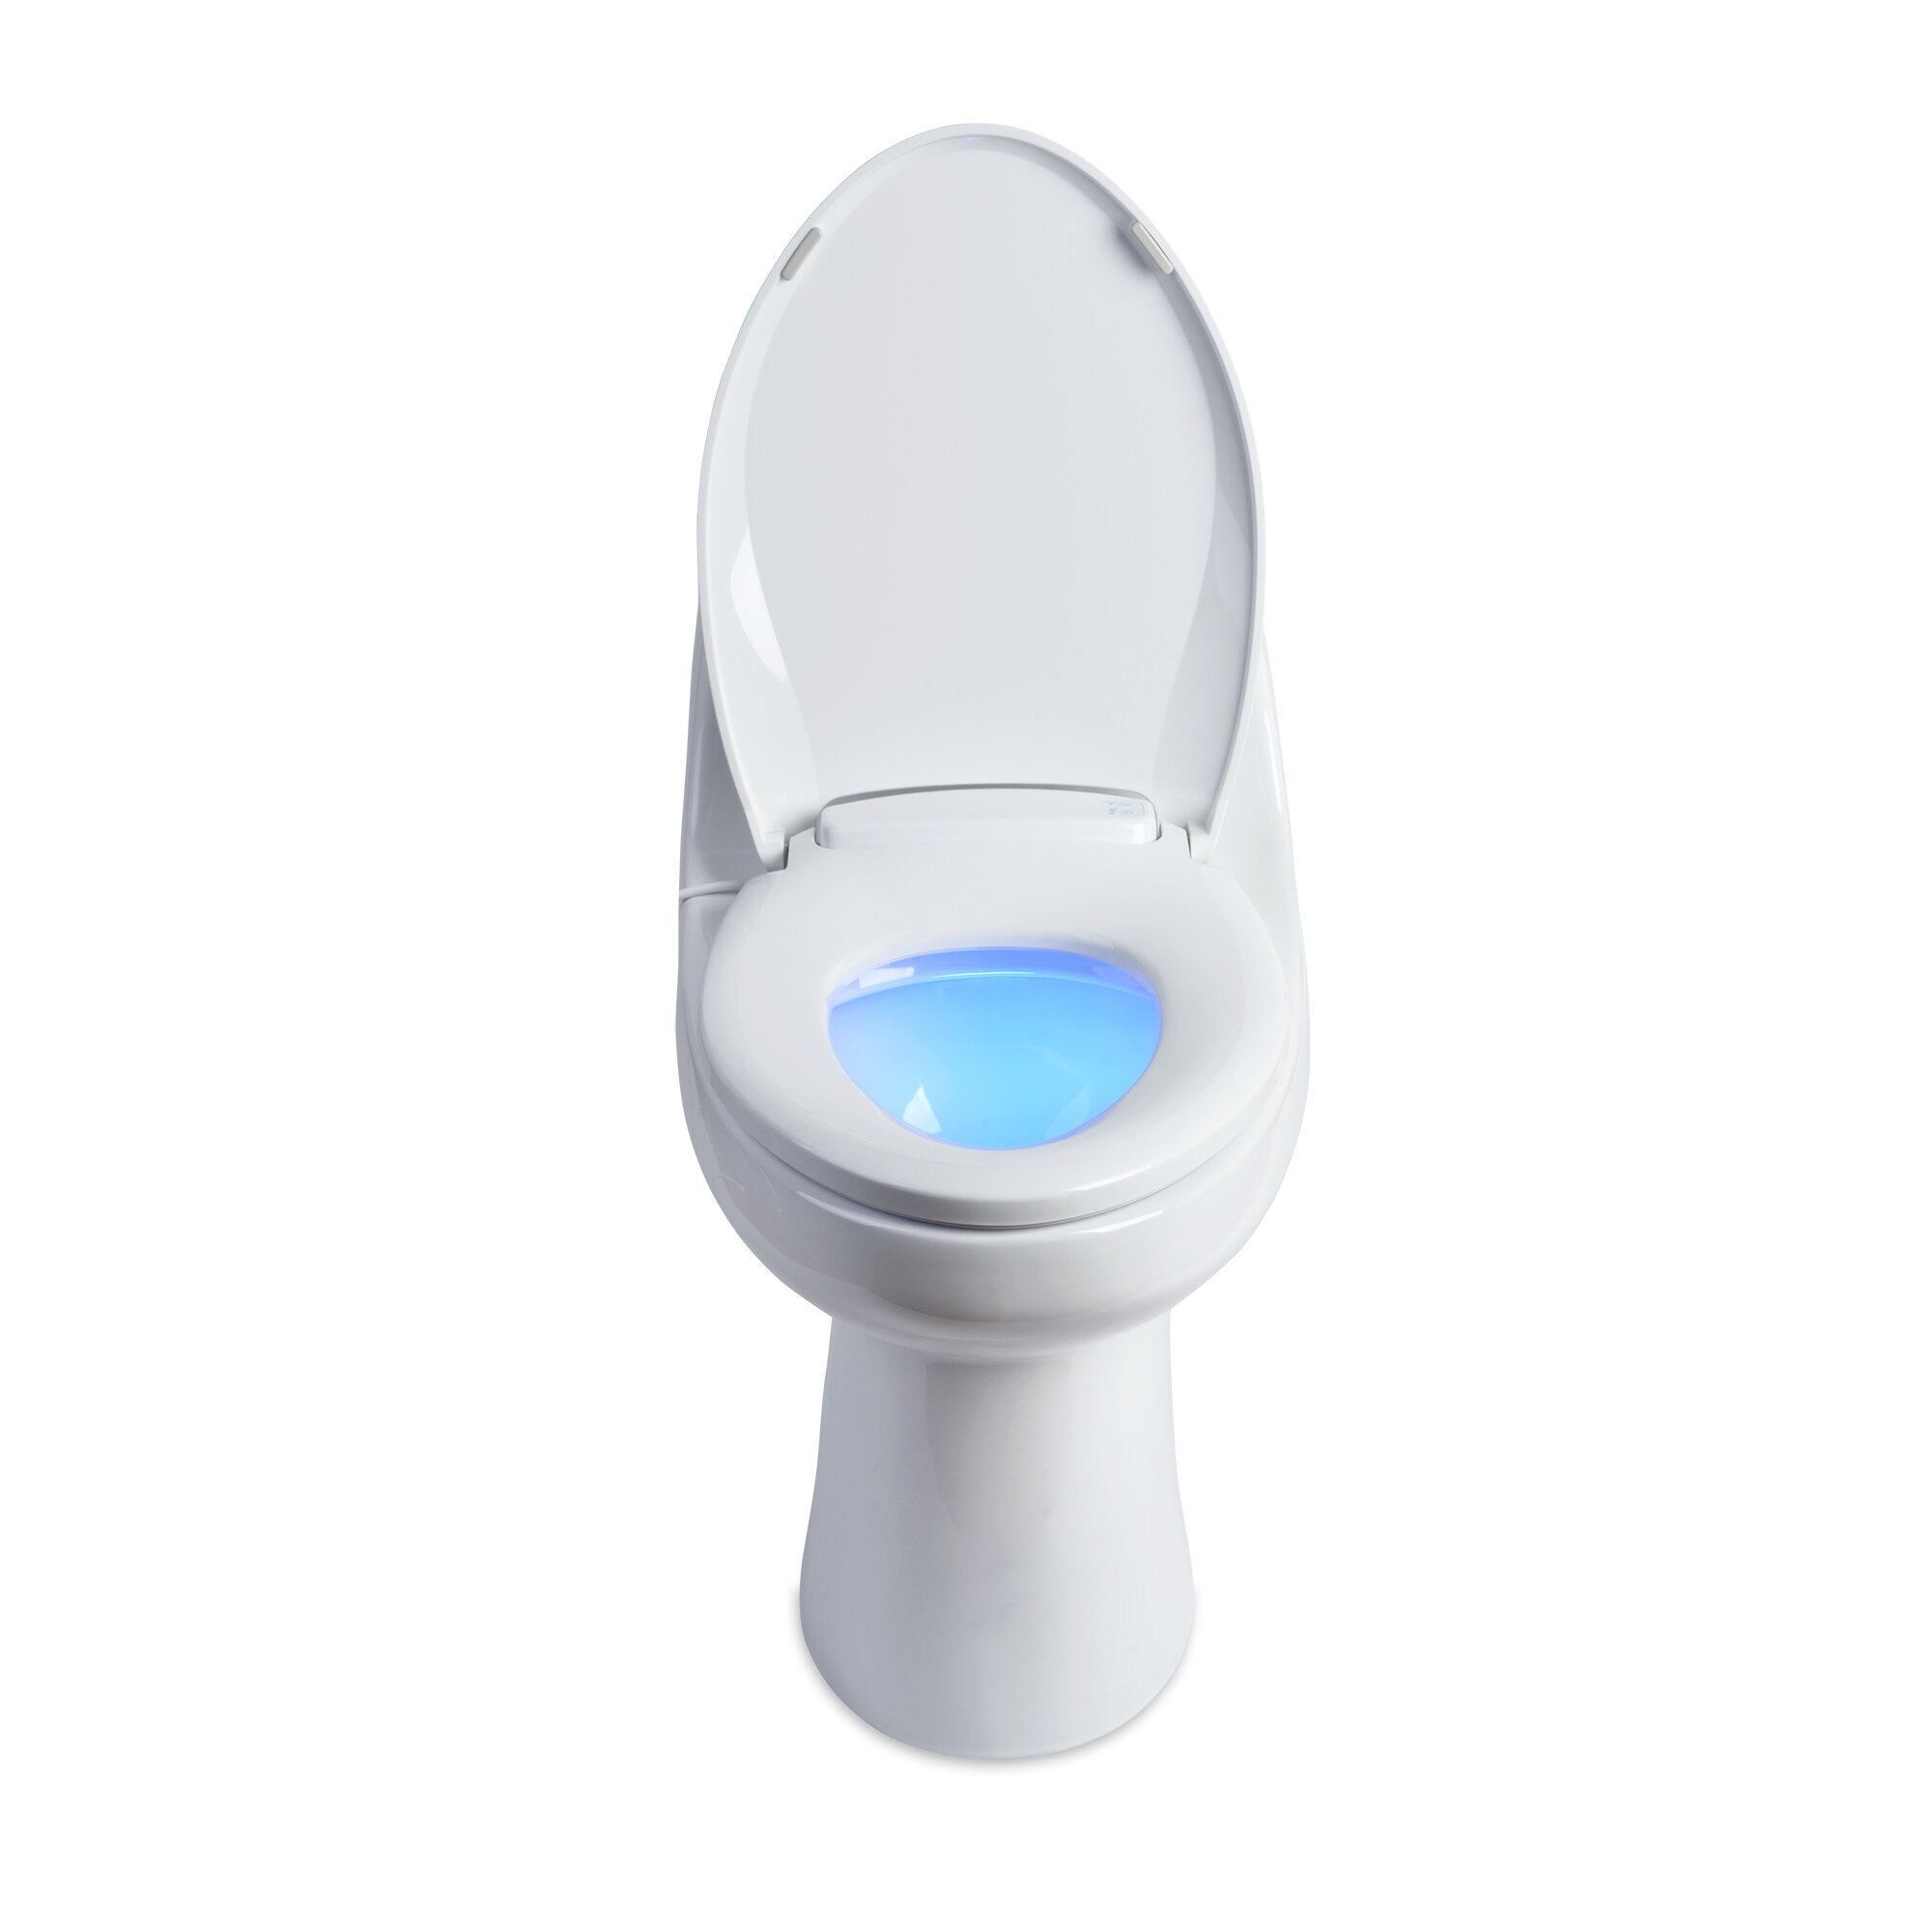 Brondell LumaWarm Heated Nightlight Toilet Seat & Reviews